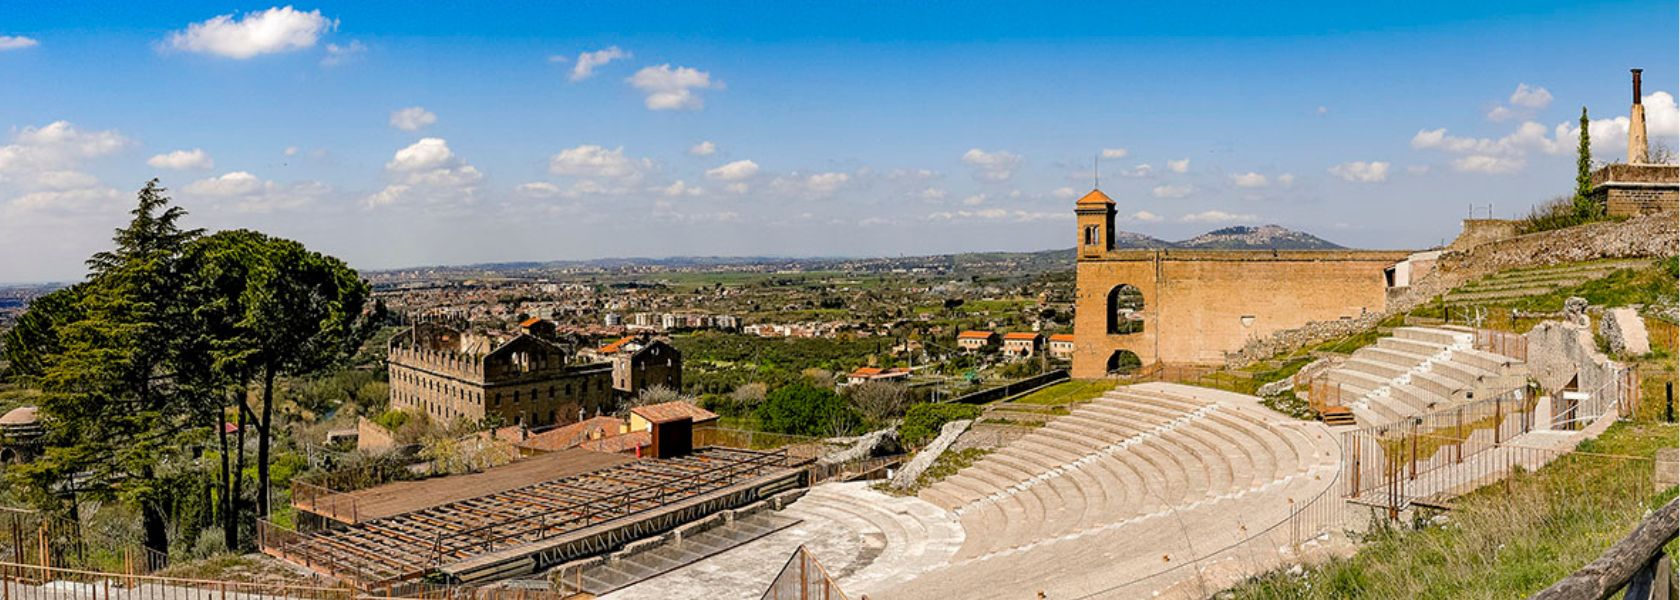 Santuario di Ercole Vincitore: Herculaneum Tibur, storia di una città